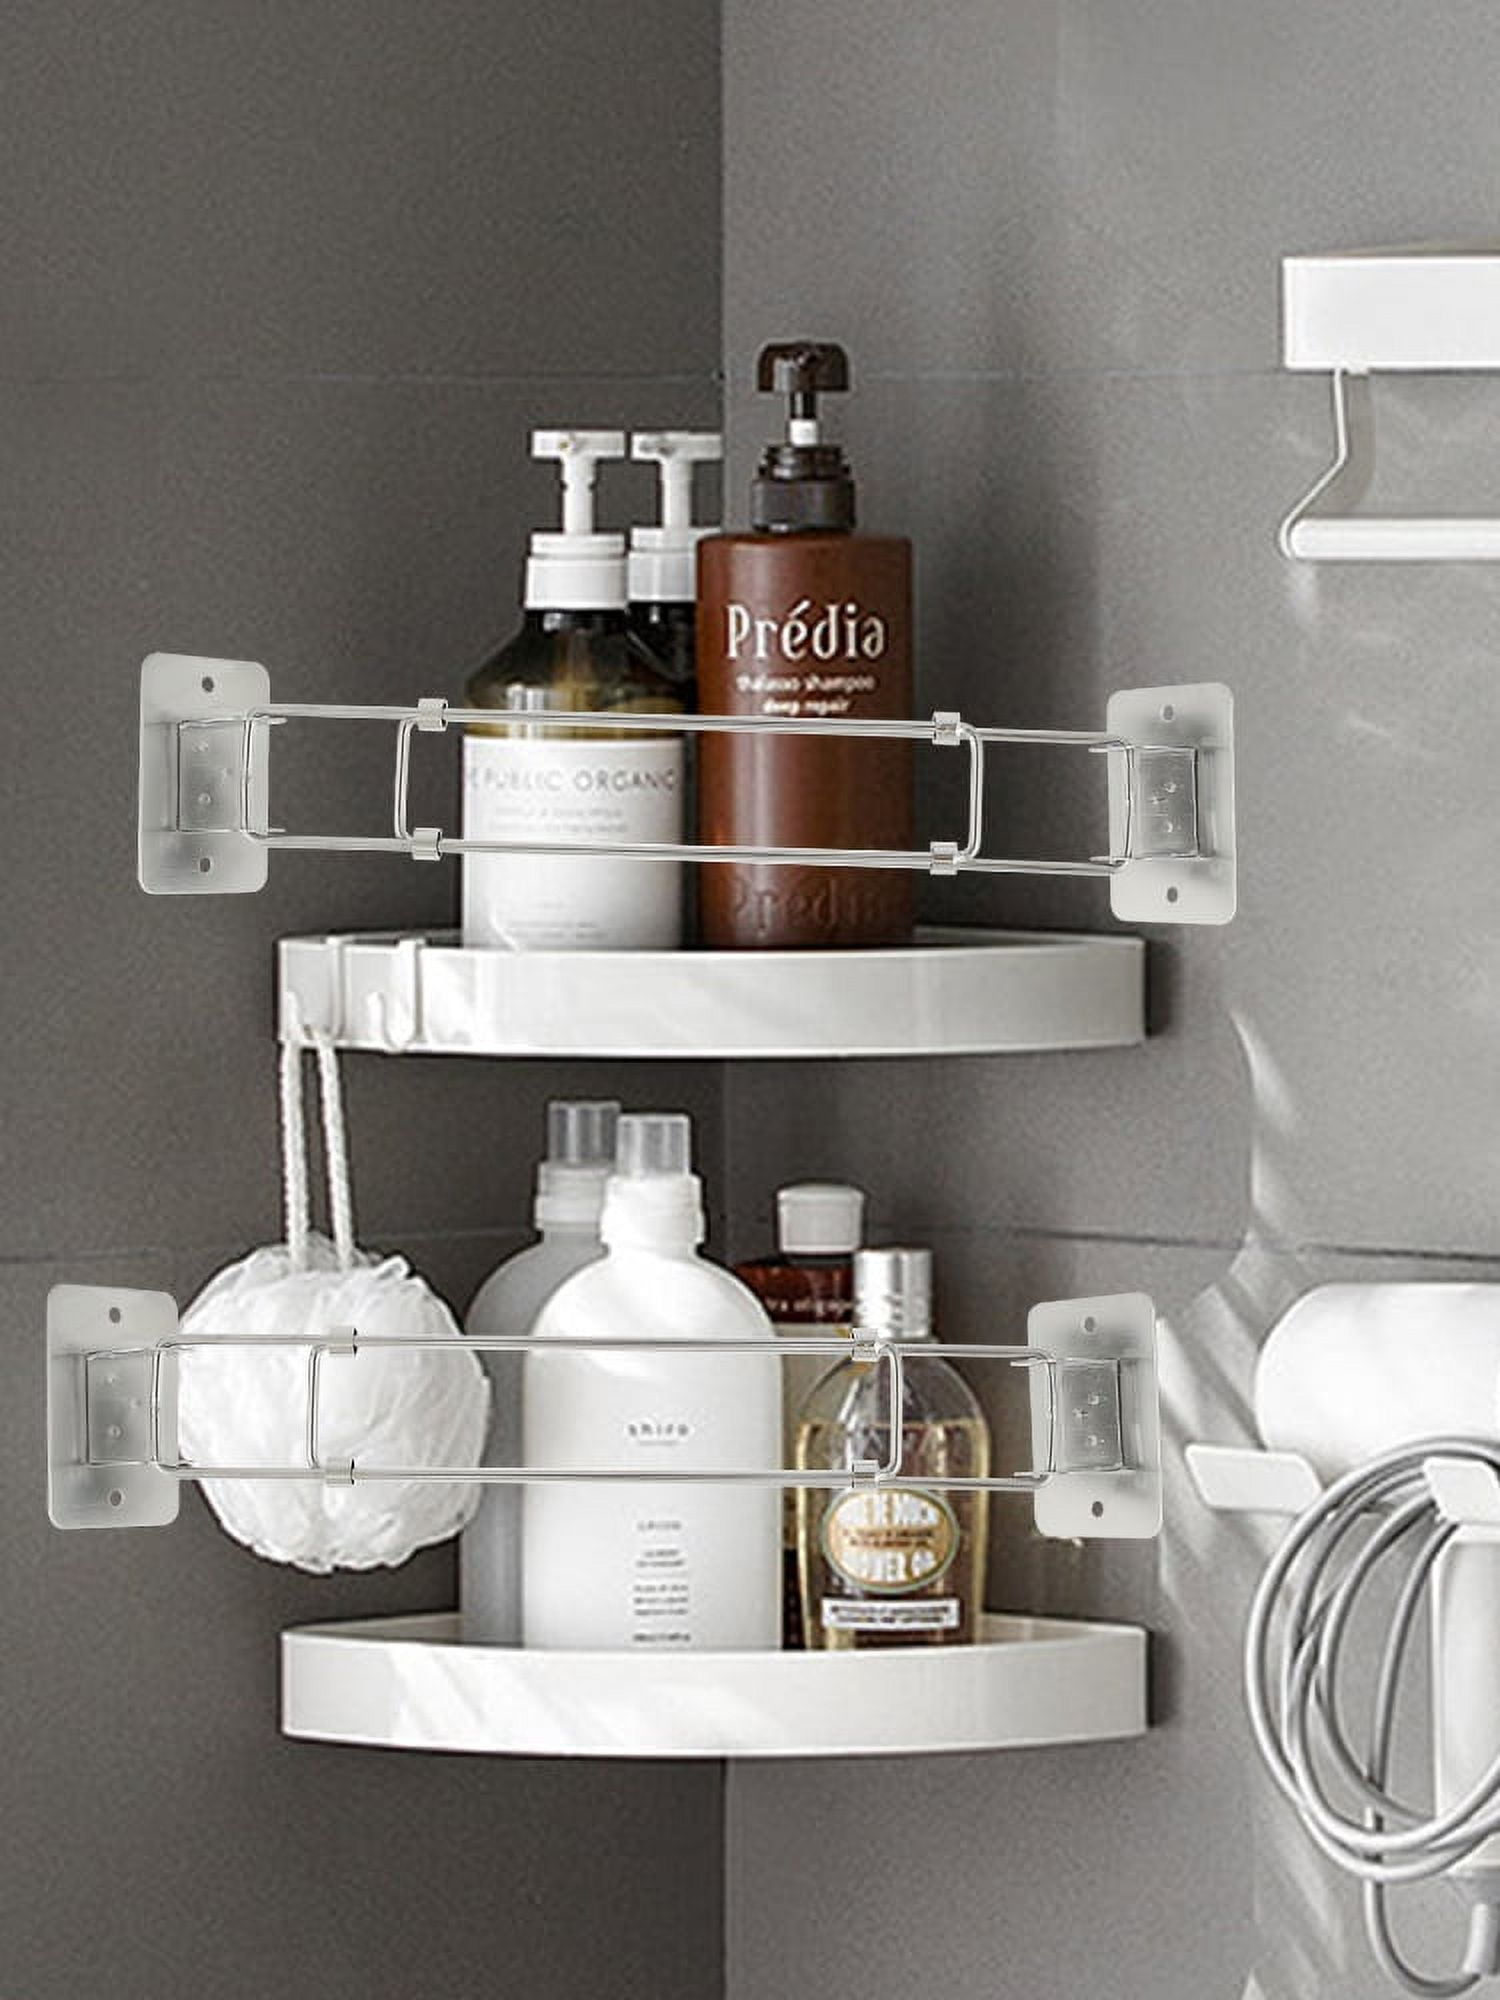 Shower Corner Shelf: Installing Caddies Shelf in your Bathroom - Coast  Design and Build Bakersfield